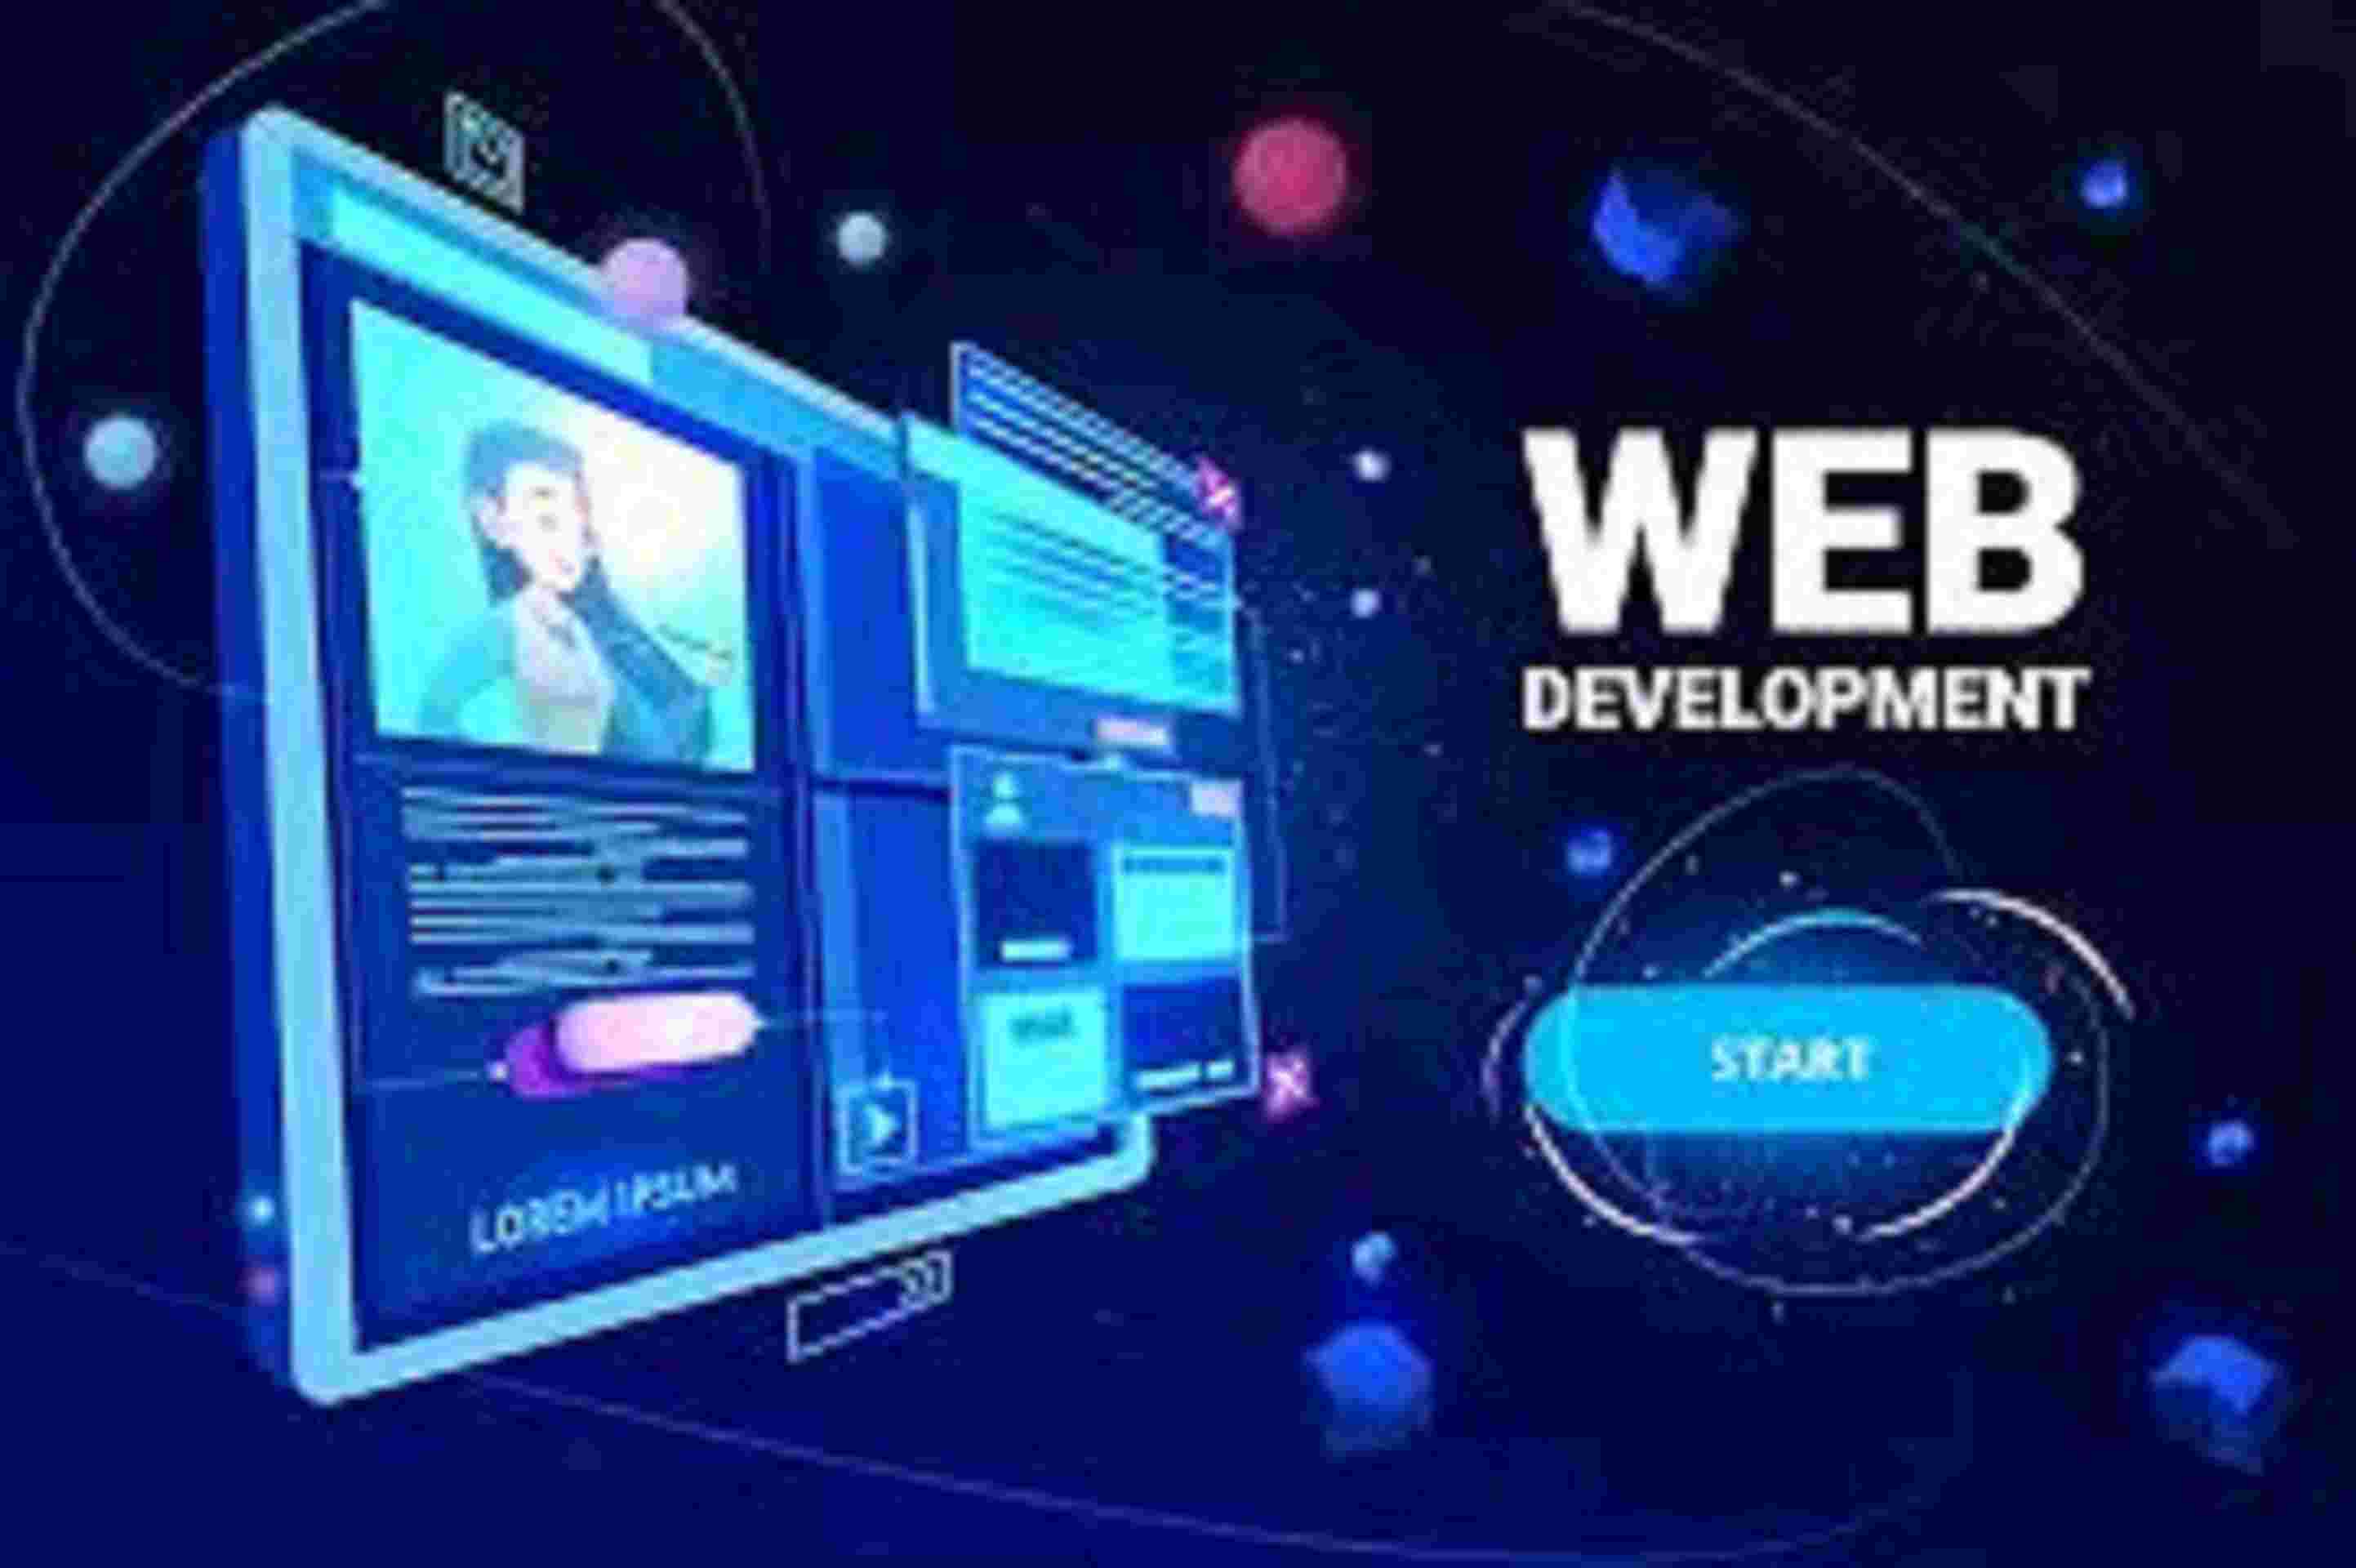 technoglobe web development training